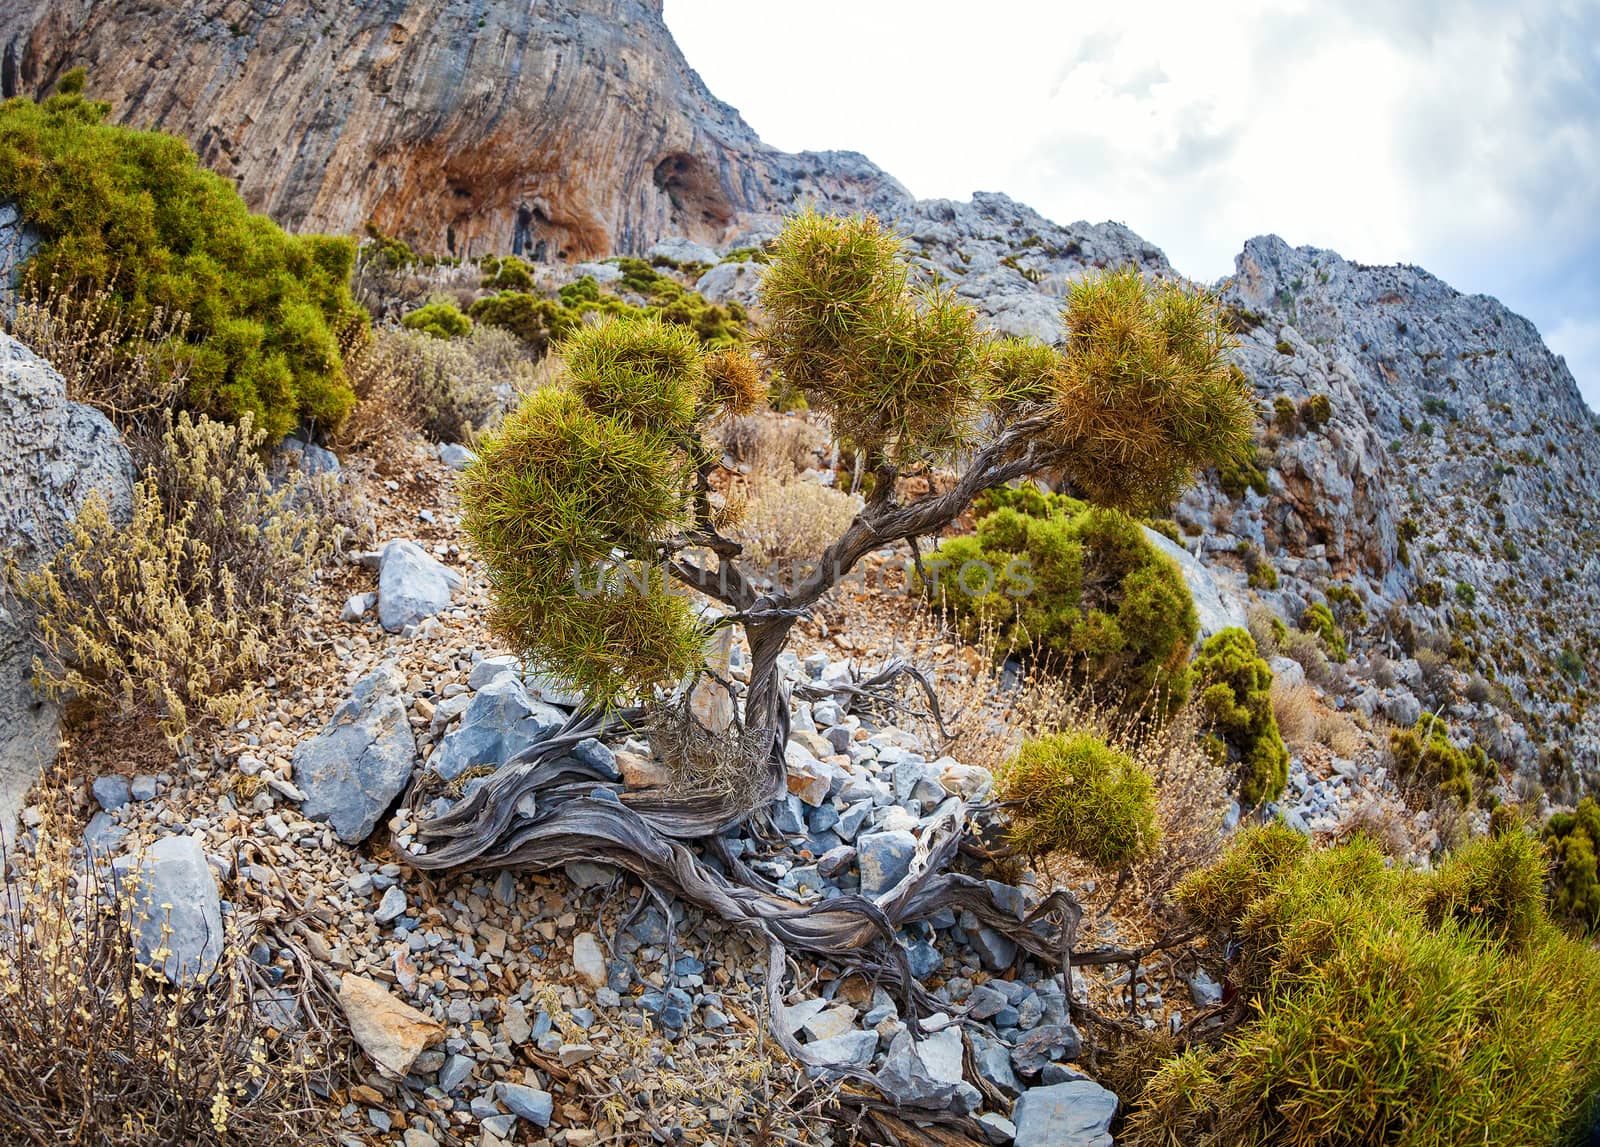 Vegetation on rocky slope in mountains. Kalymnos island, Greece.